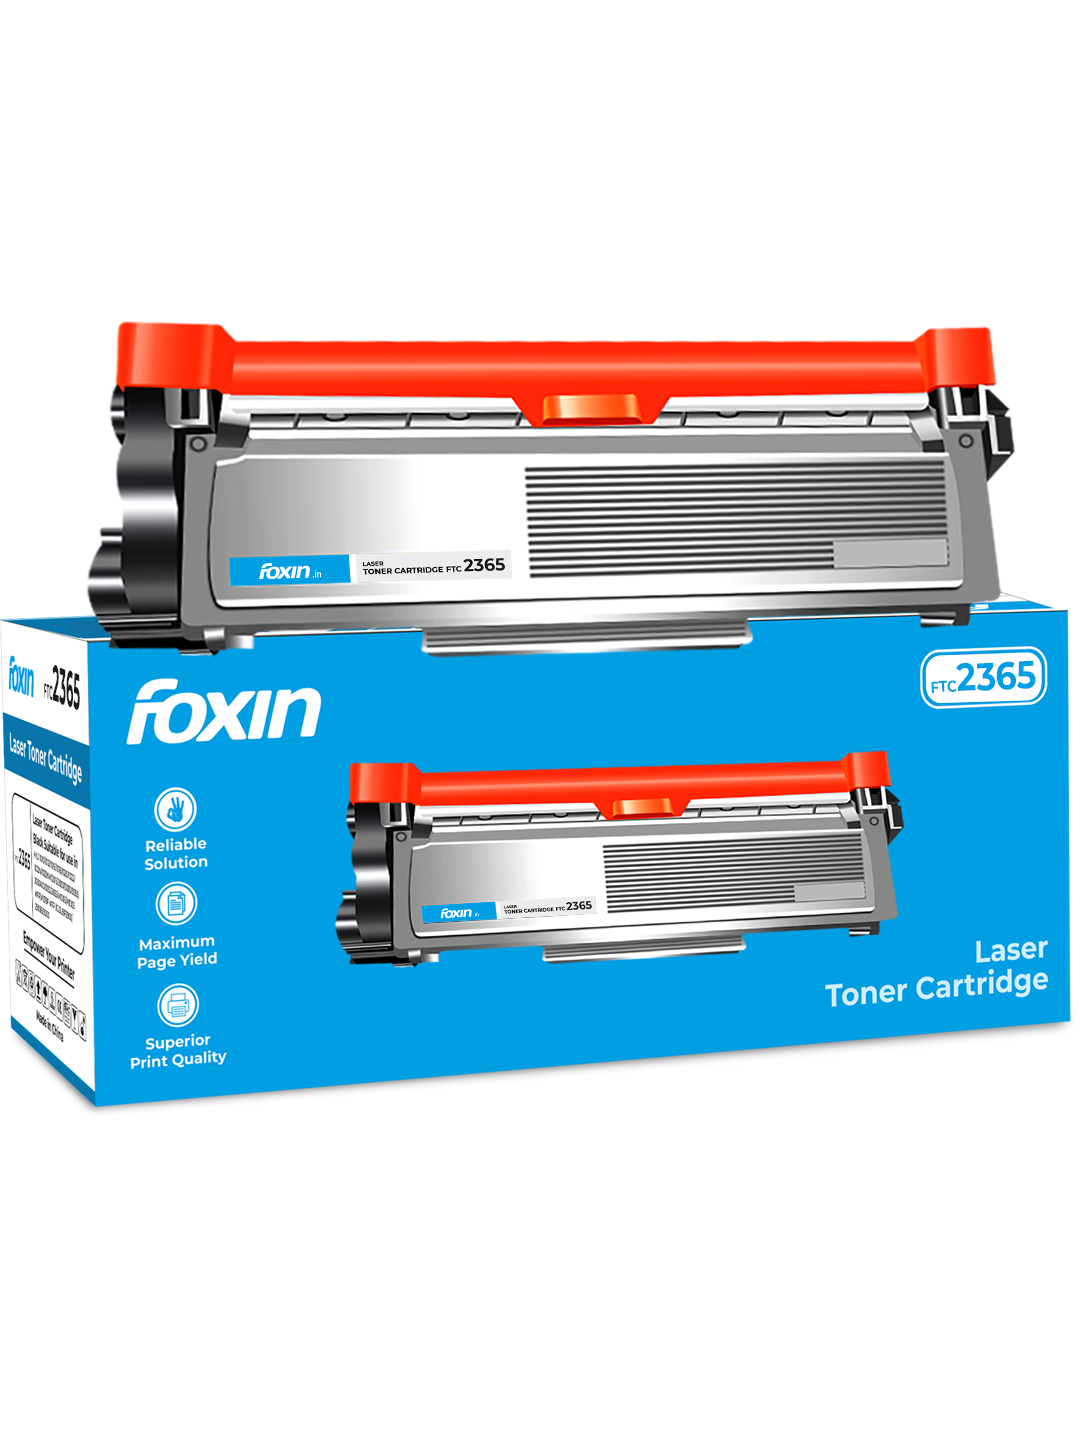 Foxin FTC 2365 Toner Cartridge